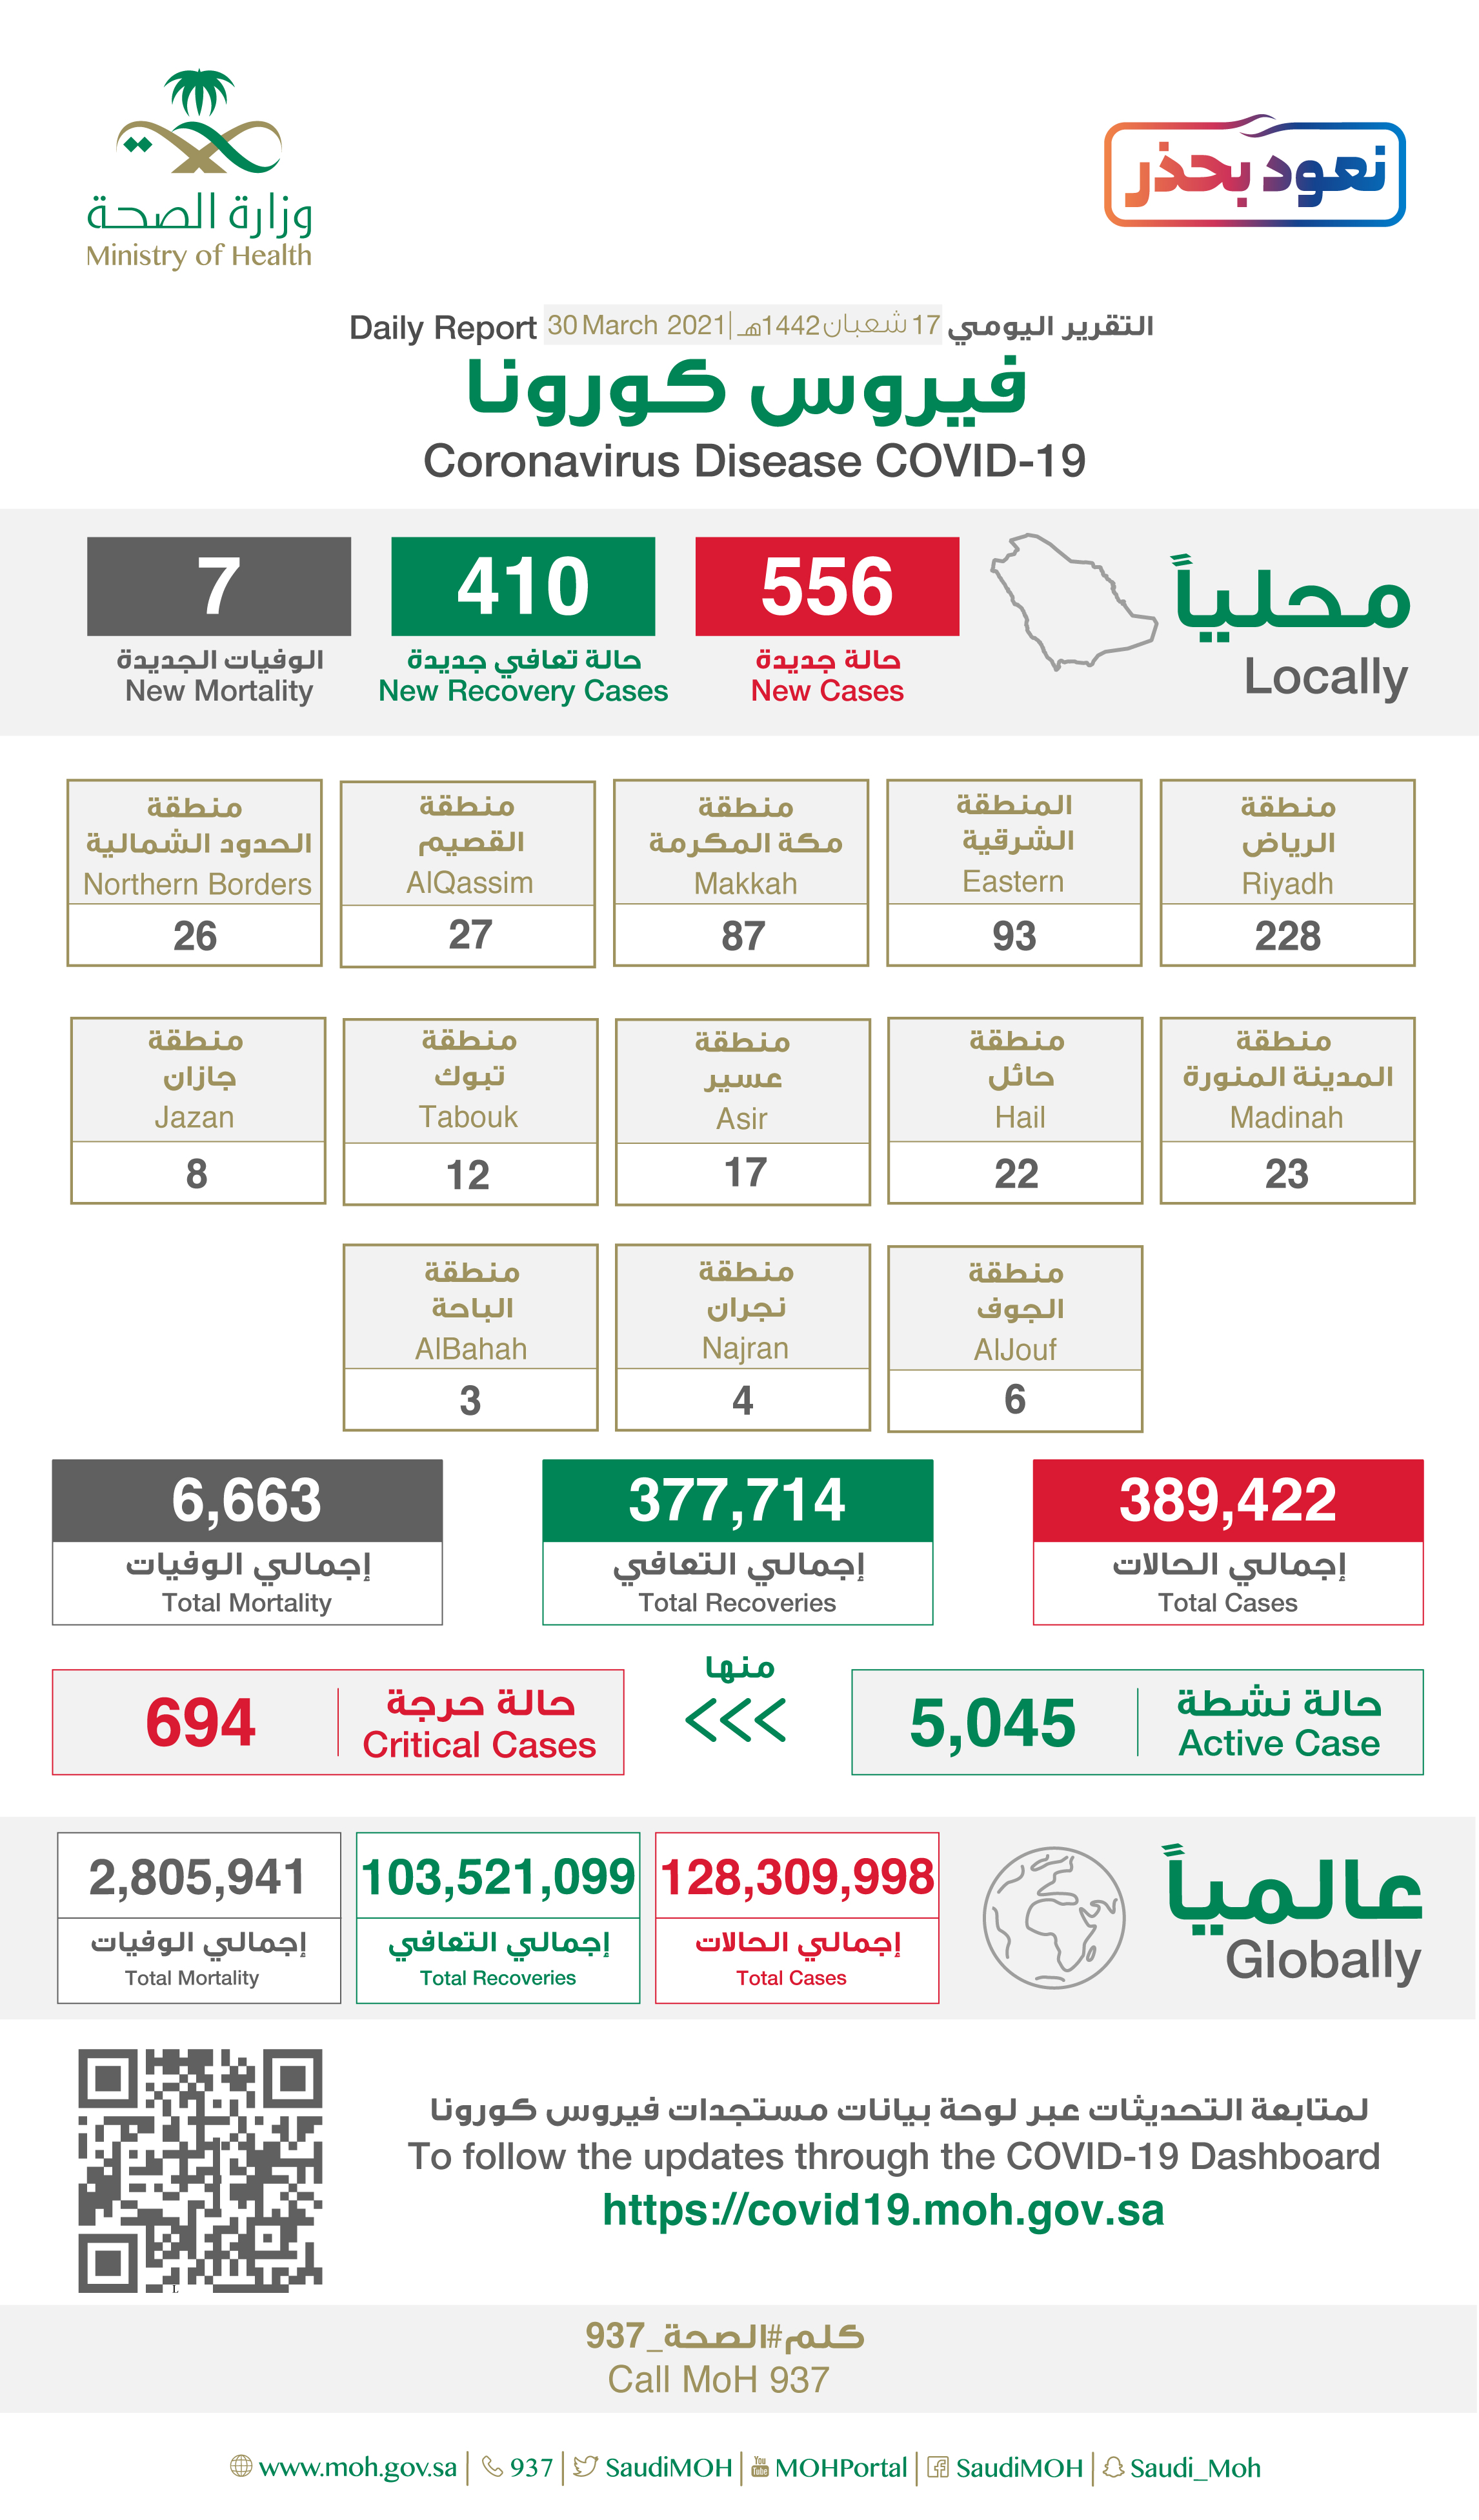 Saudi Arabia Coronavirus : Total Cases :389,422 , New Cases : 556, Cured : 377,714 , Deaths: 6,663, Active Cases : 5,045